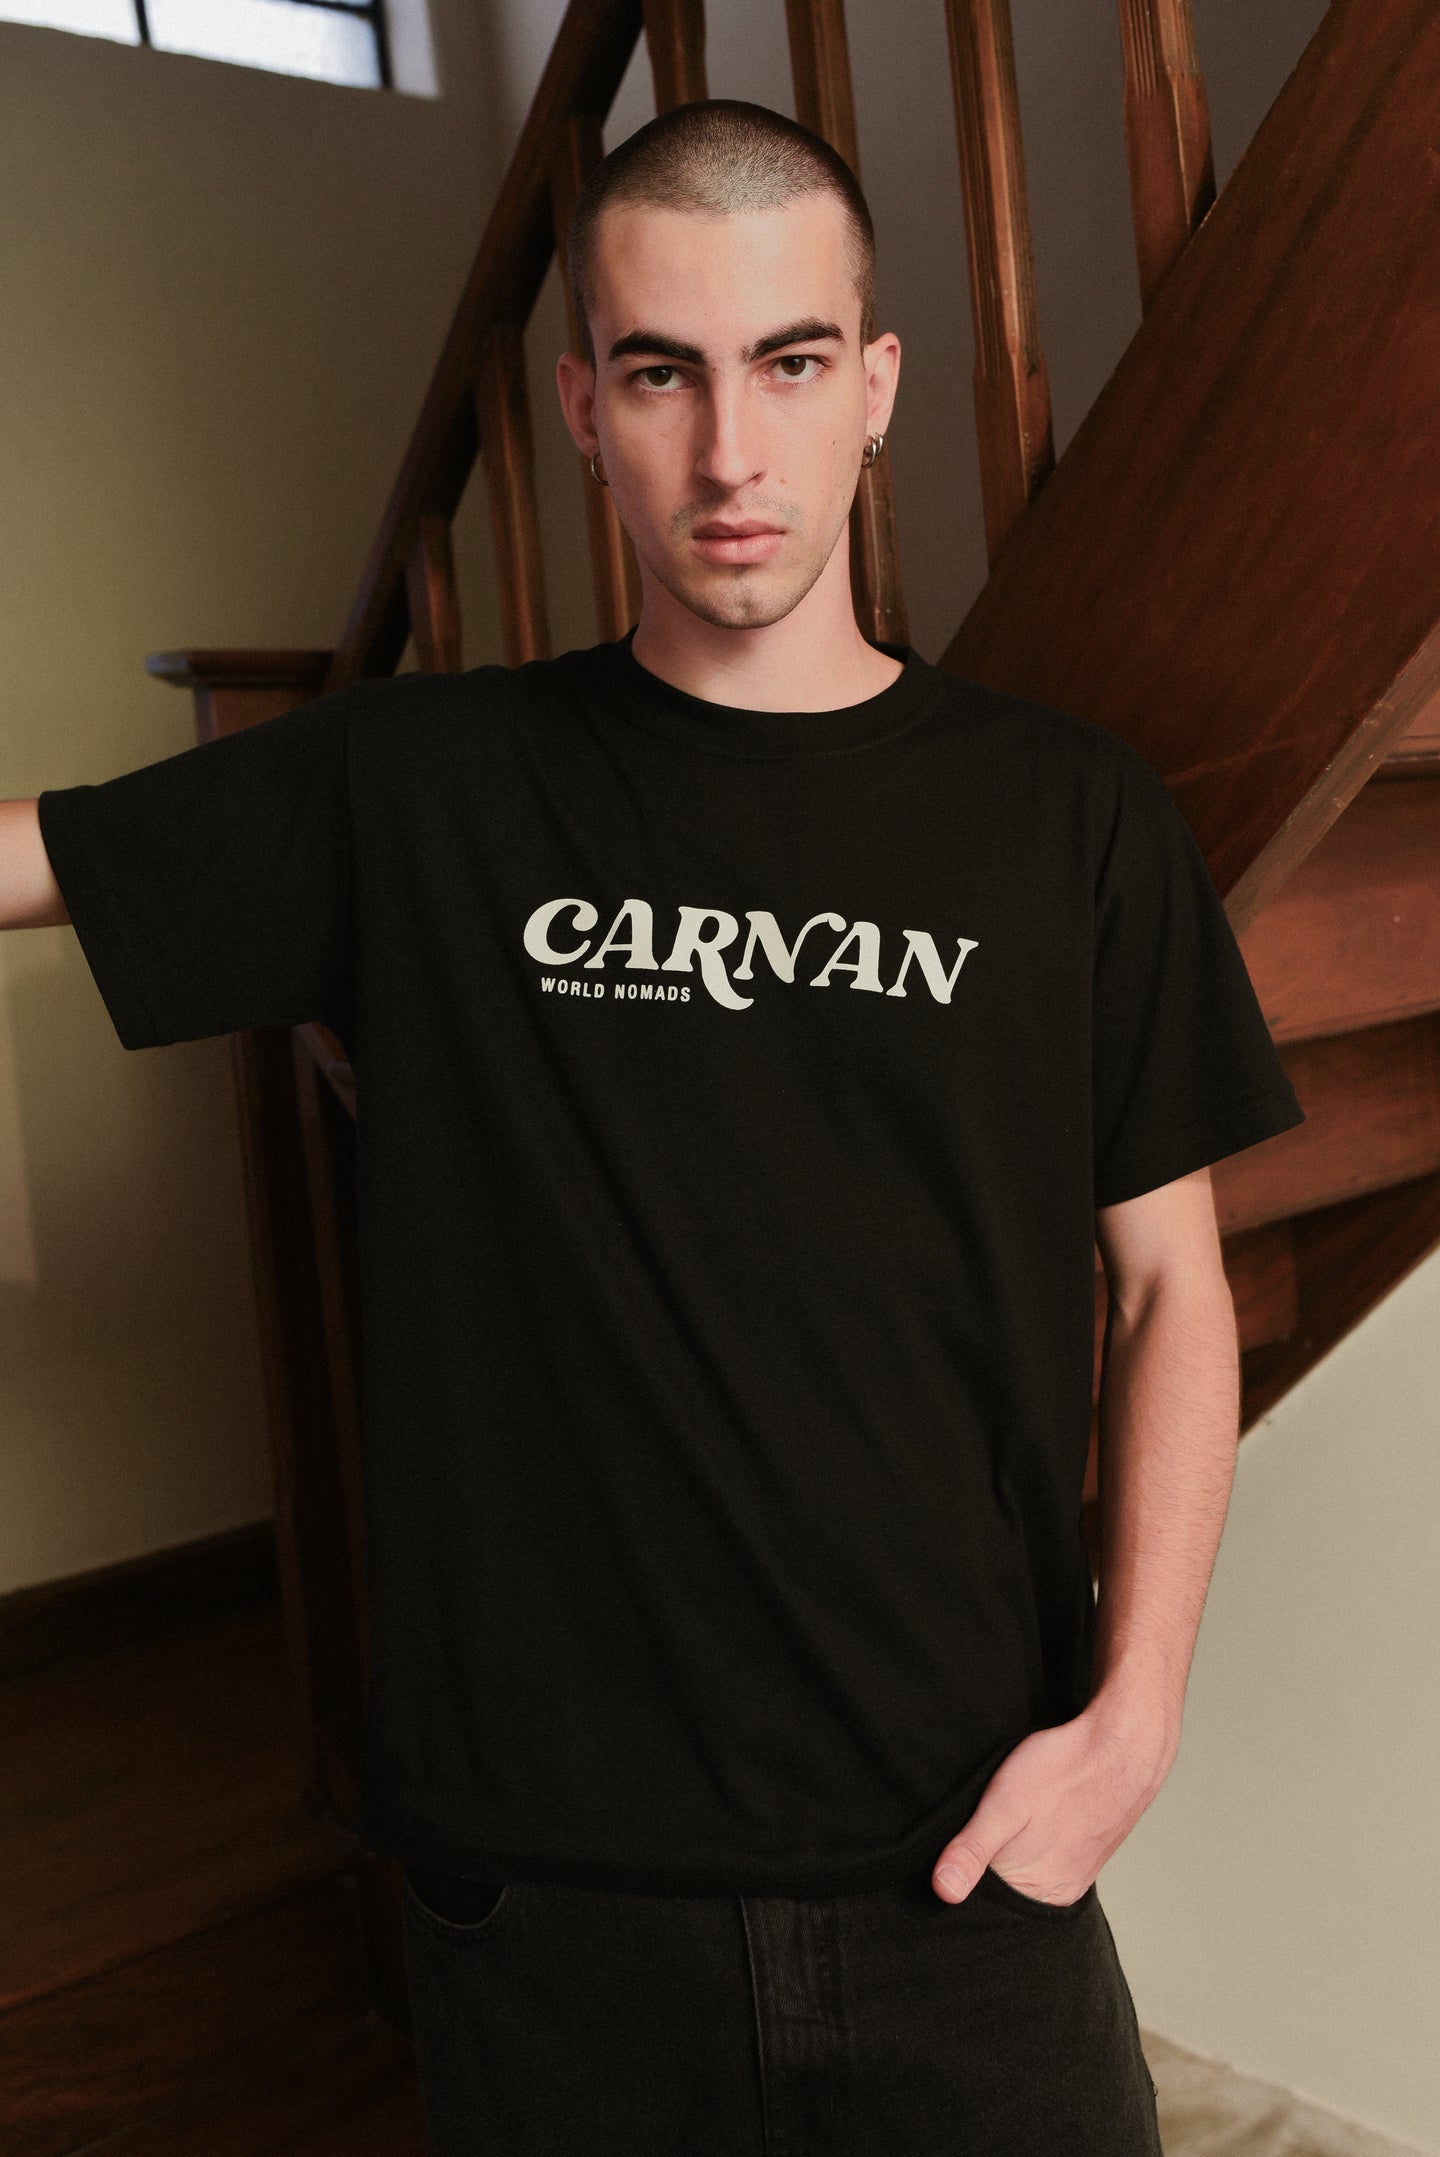 Camiseta Carnan Heavy Standard Preta